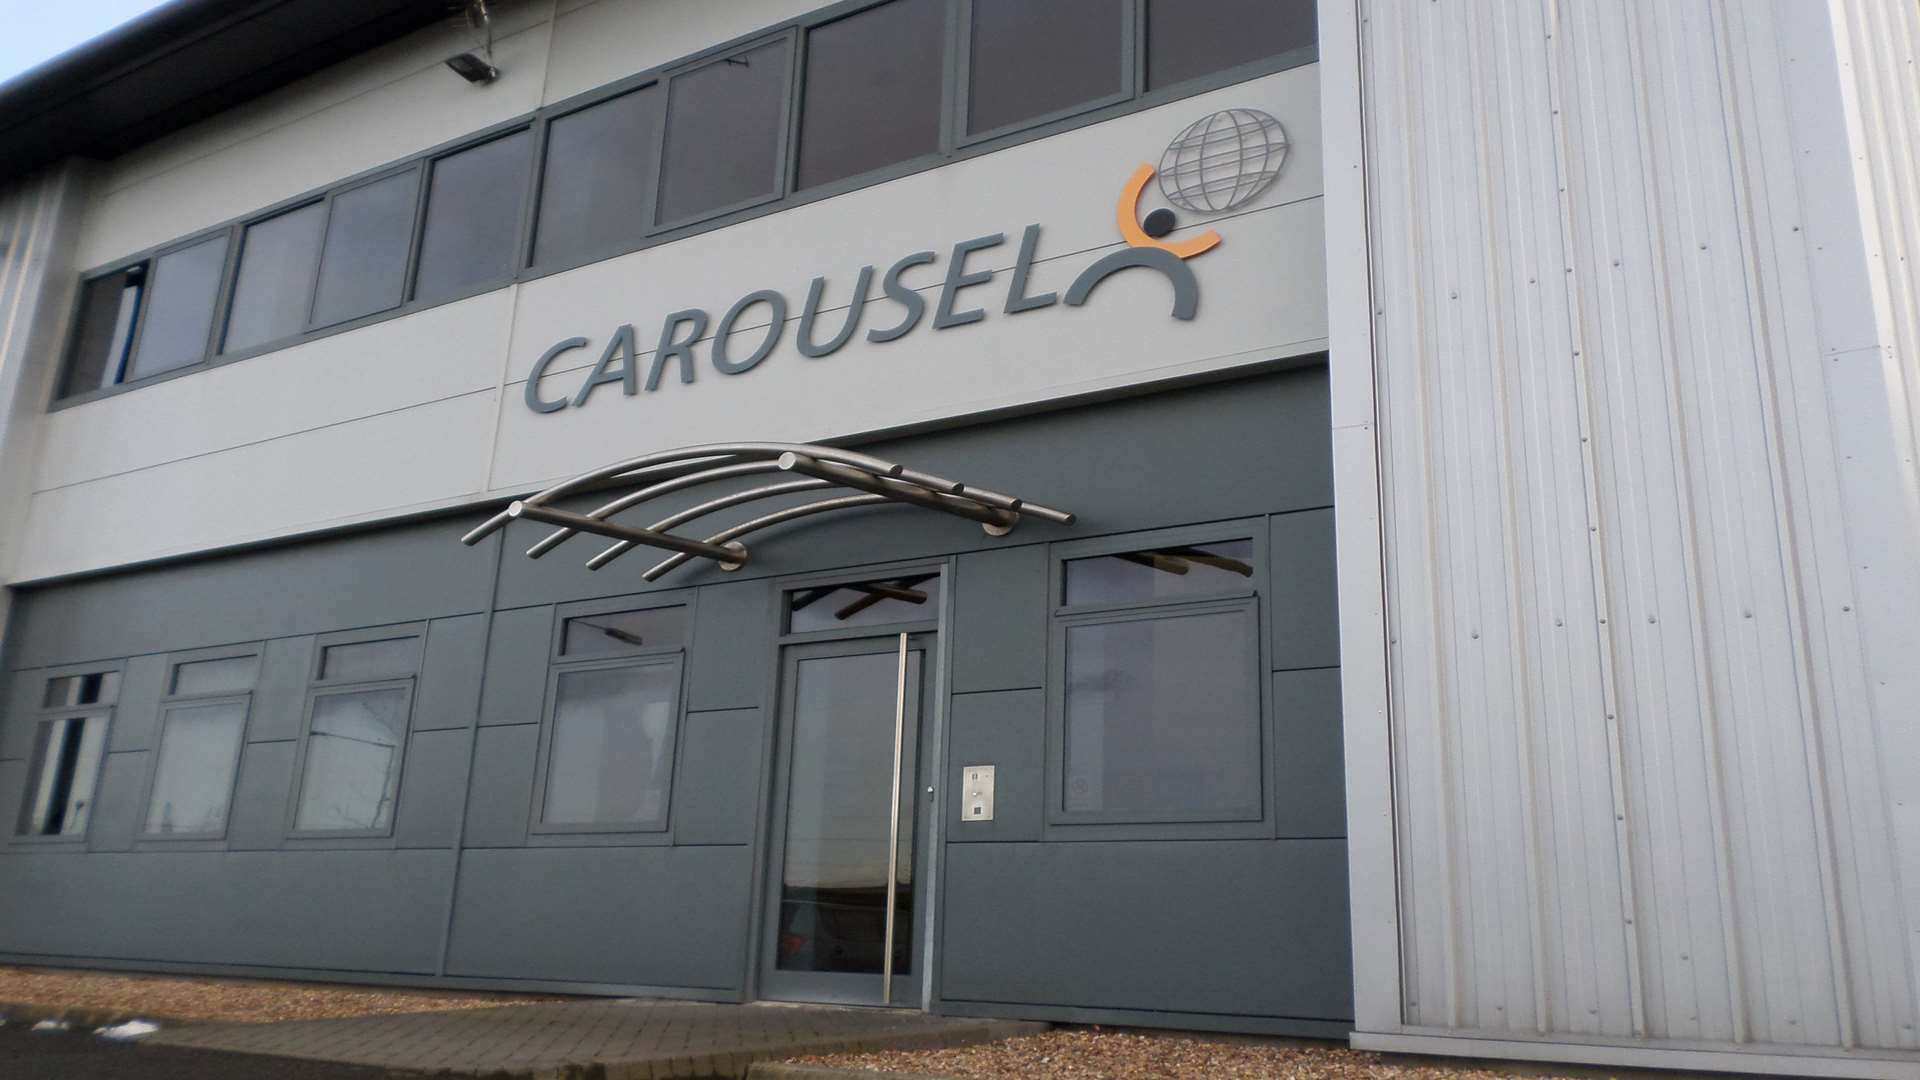 Carousel Logistics is based at Eurolink business park in Sittingbourne